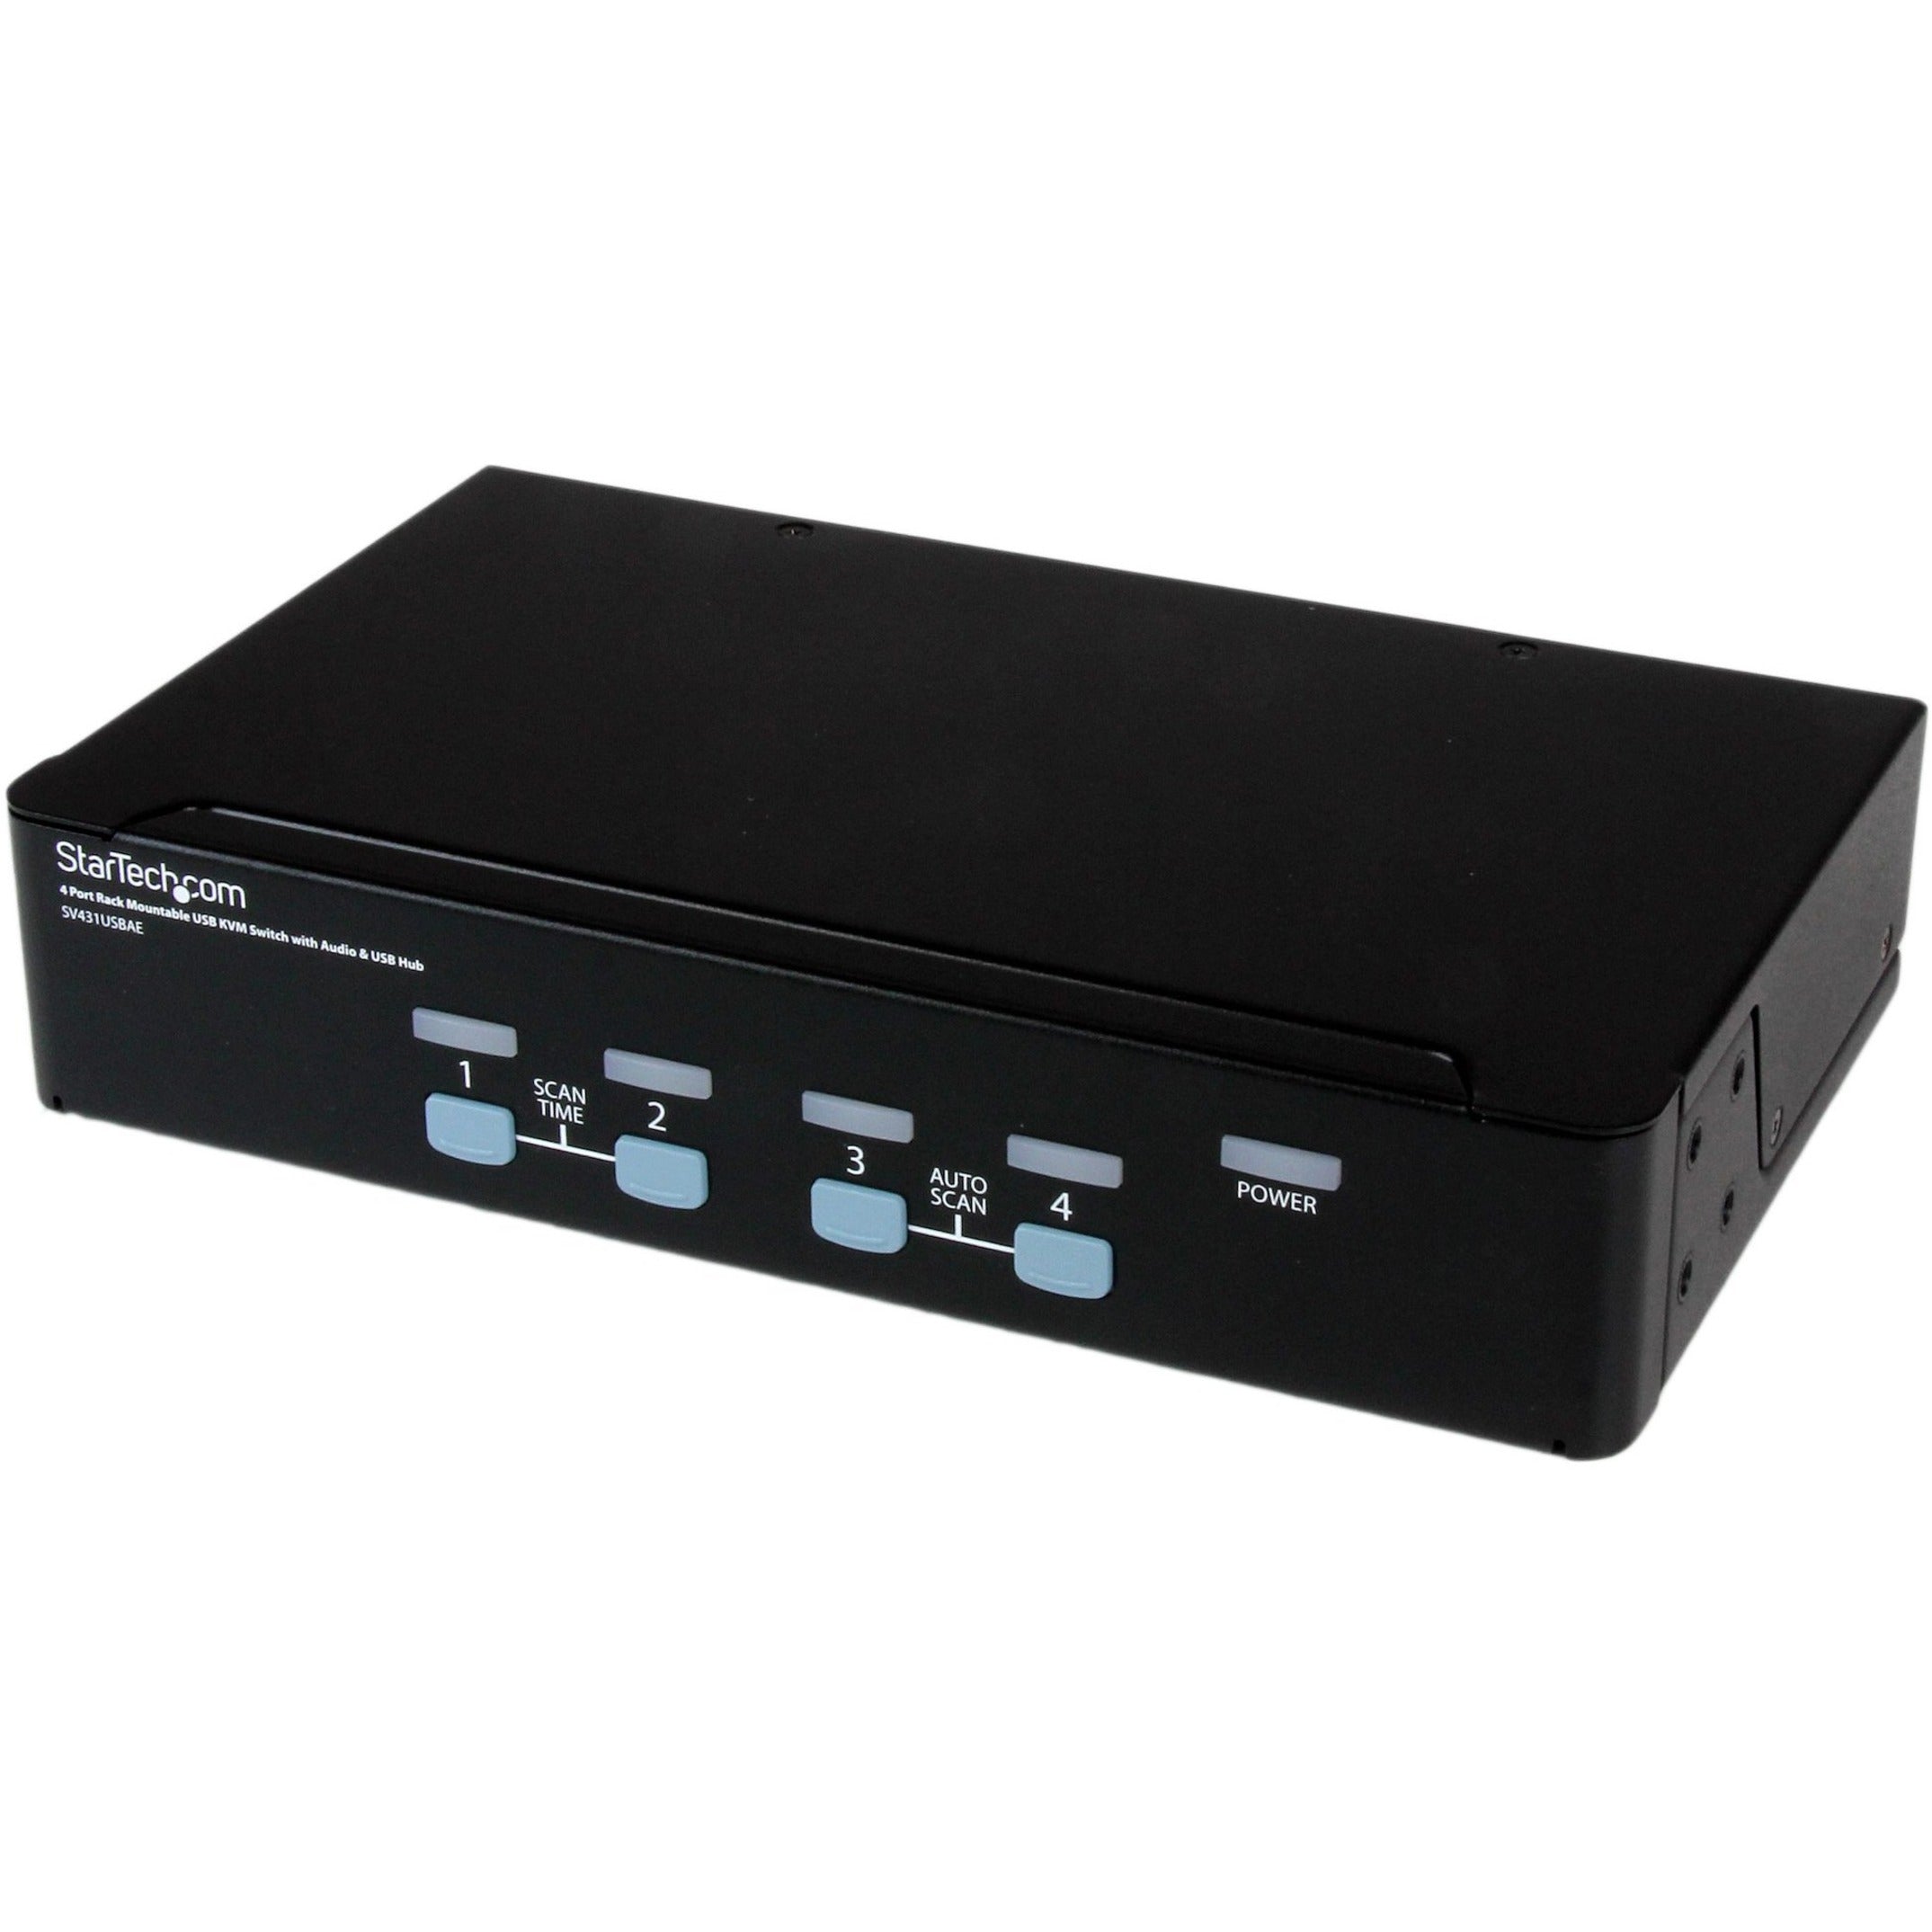 StarTech.com SV431USBAE 4 Port Rack Mountable USB KVM Switch with Audio & USB 2.0 Hub, TAA Compliant, 3 Year Warranty